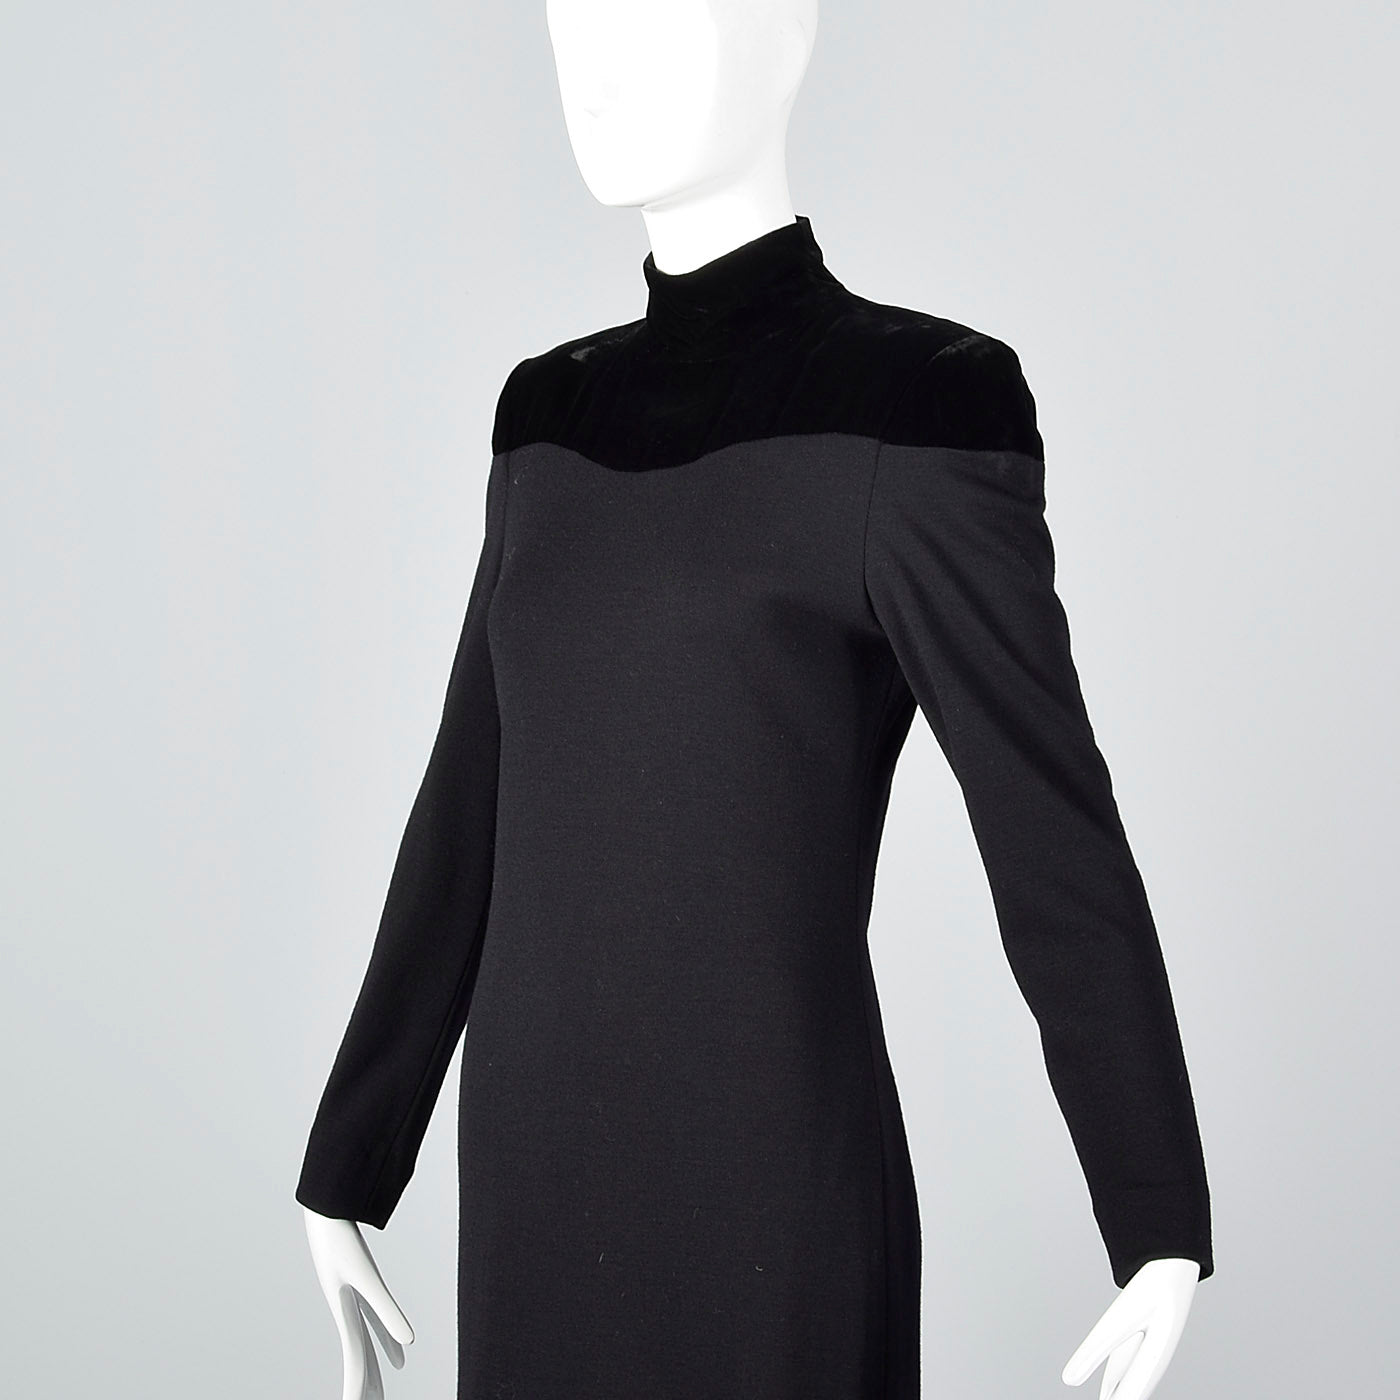 Lanvin Tight Black Pencil Dress with Velvet Shoulders